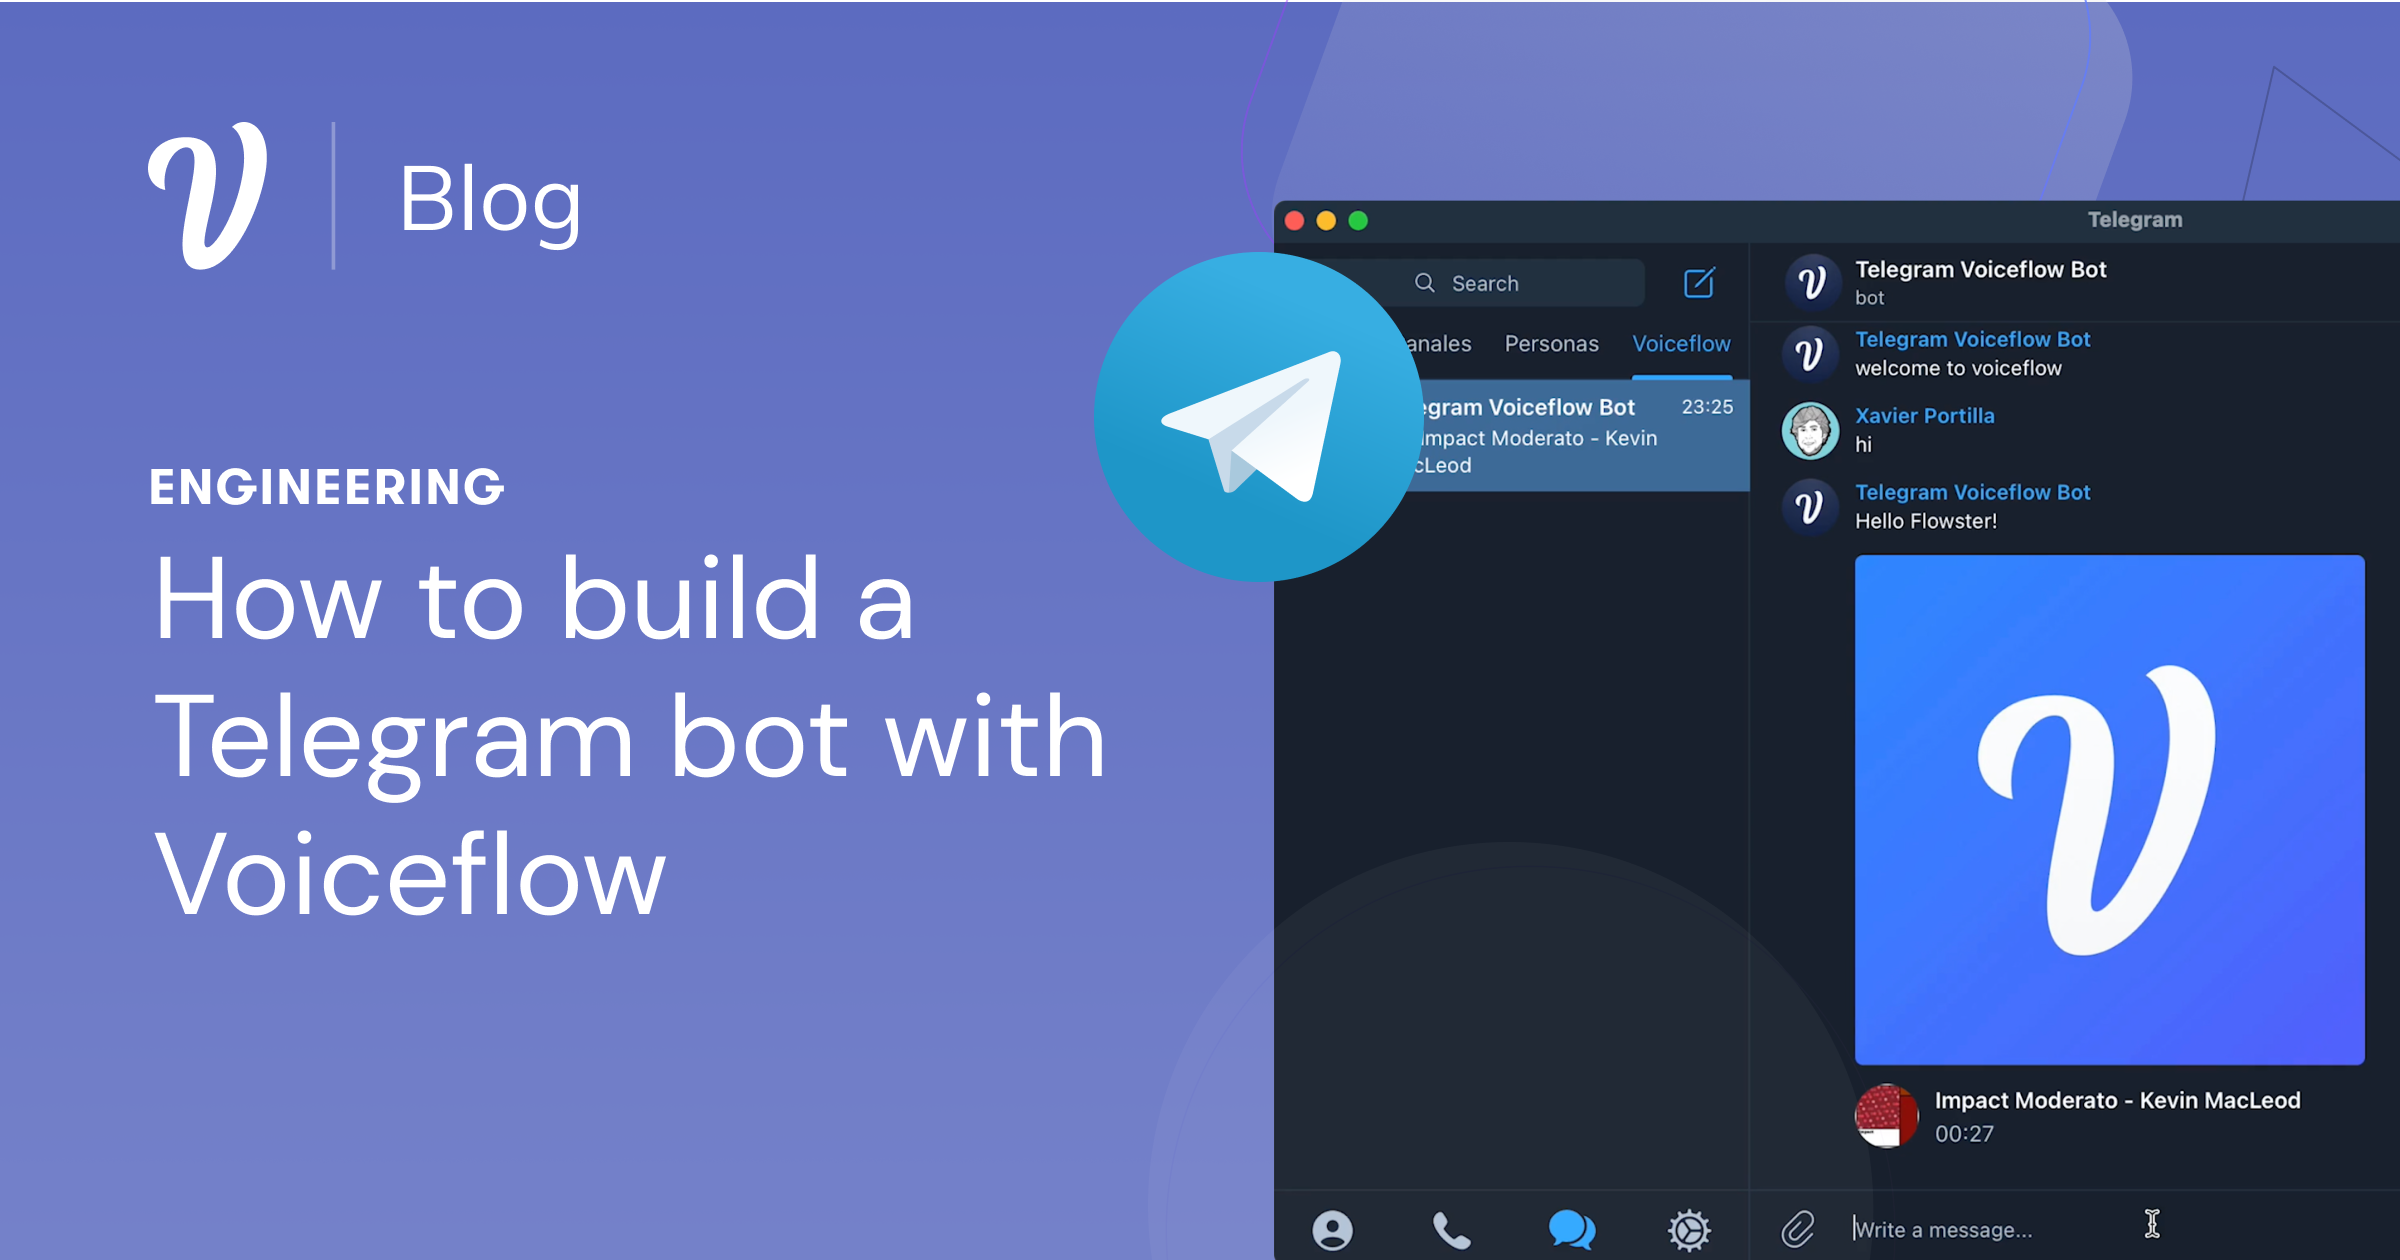 Build a telegram robot with Voiceflow